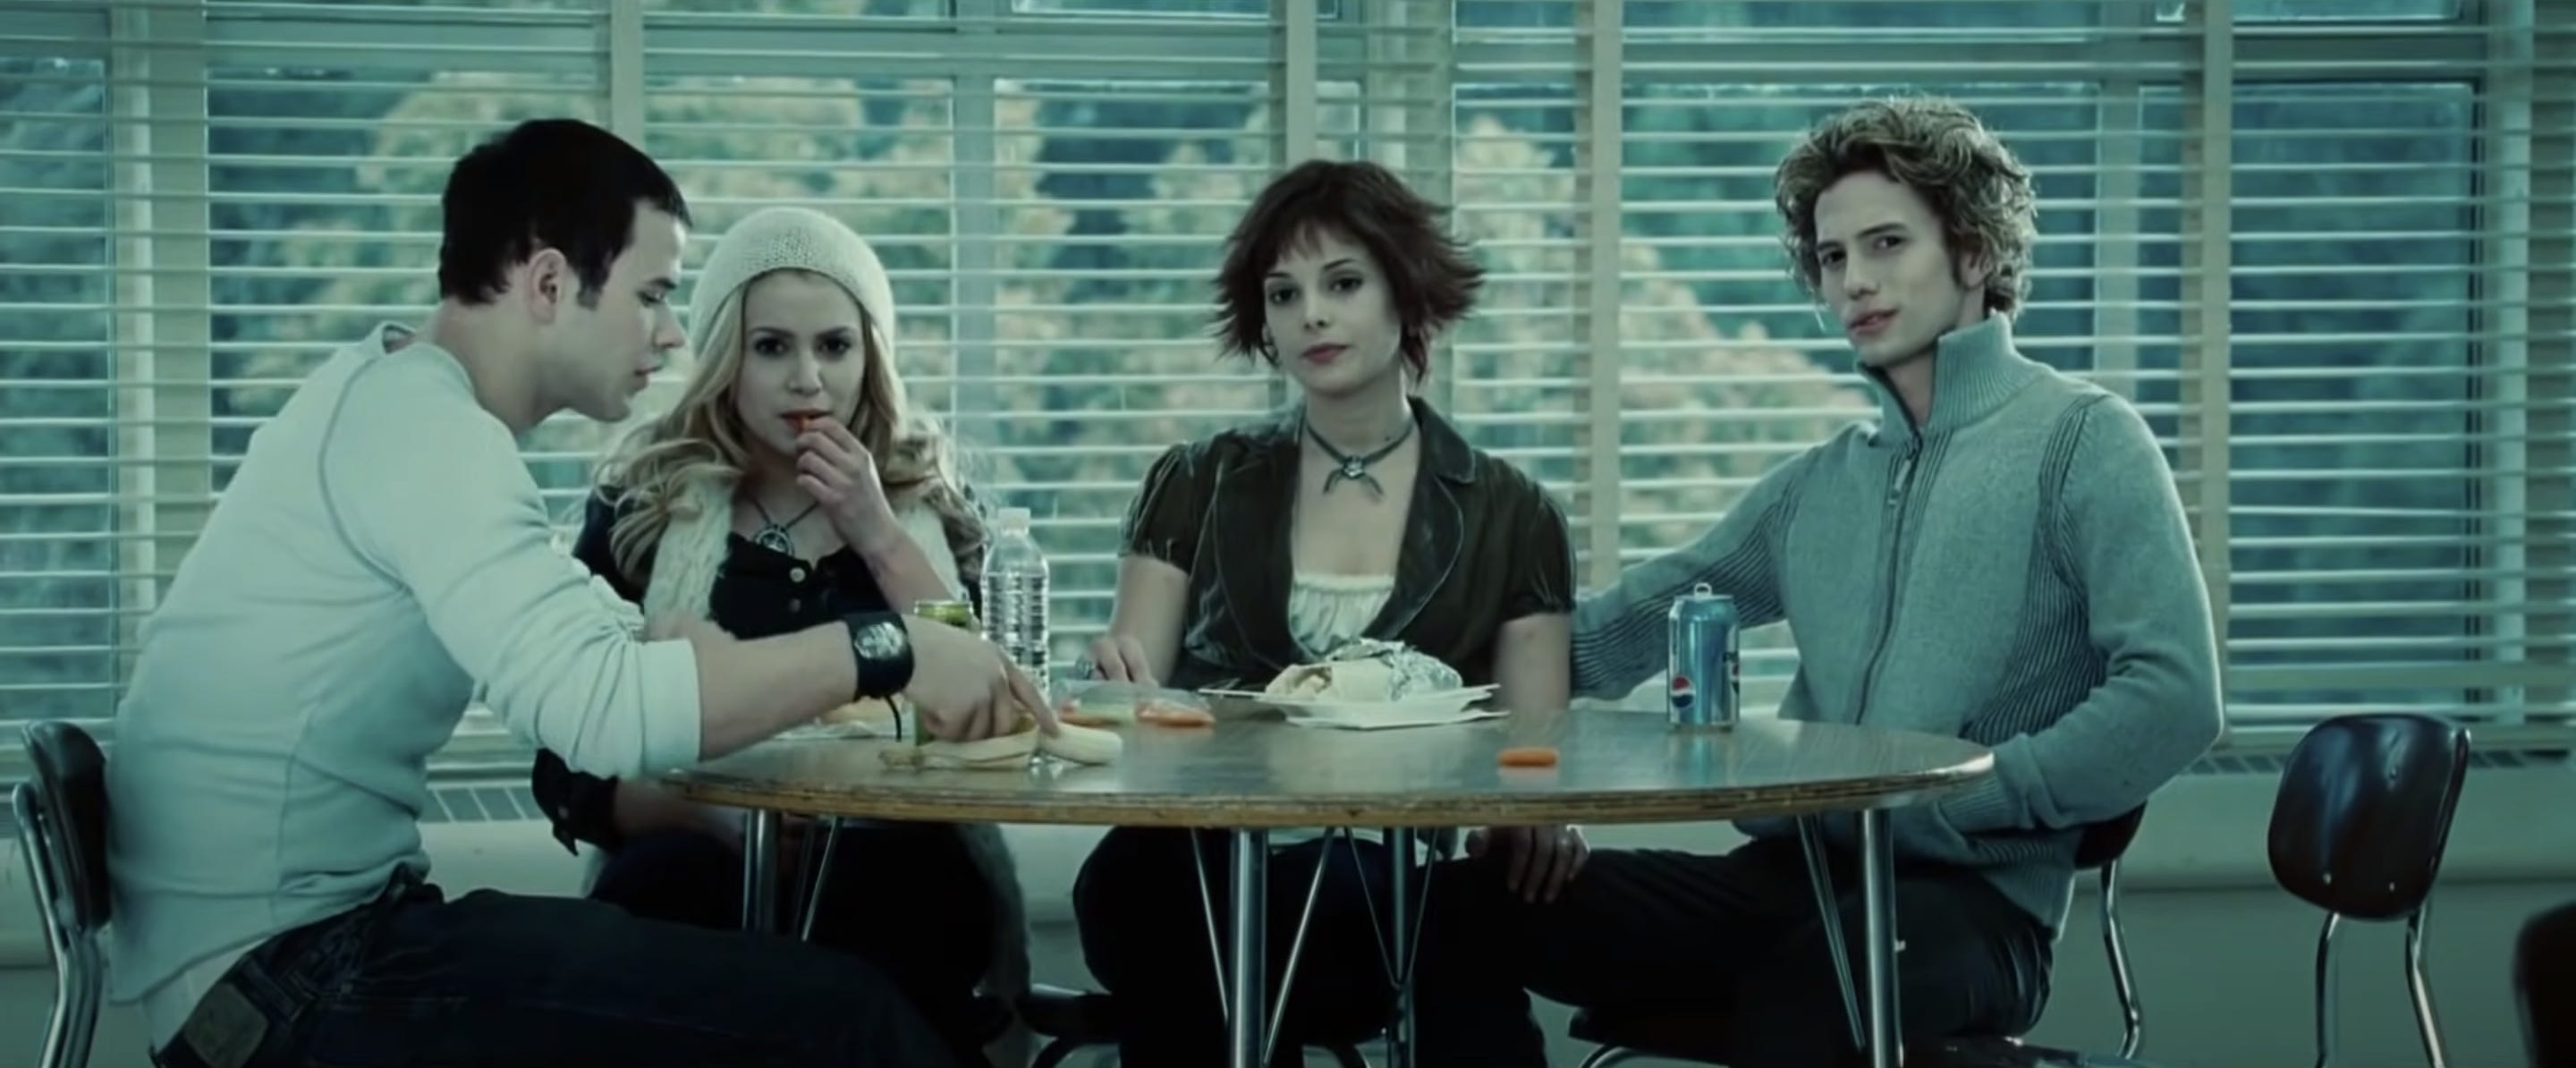 Kellan Lutz, Nikki Reed, Ashley Greene und Jackson Rathbone in „Twilight“.